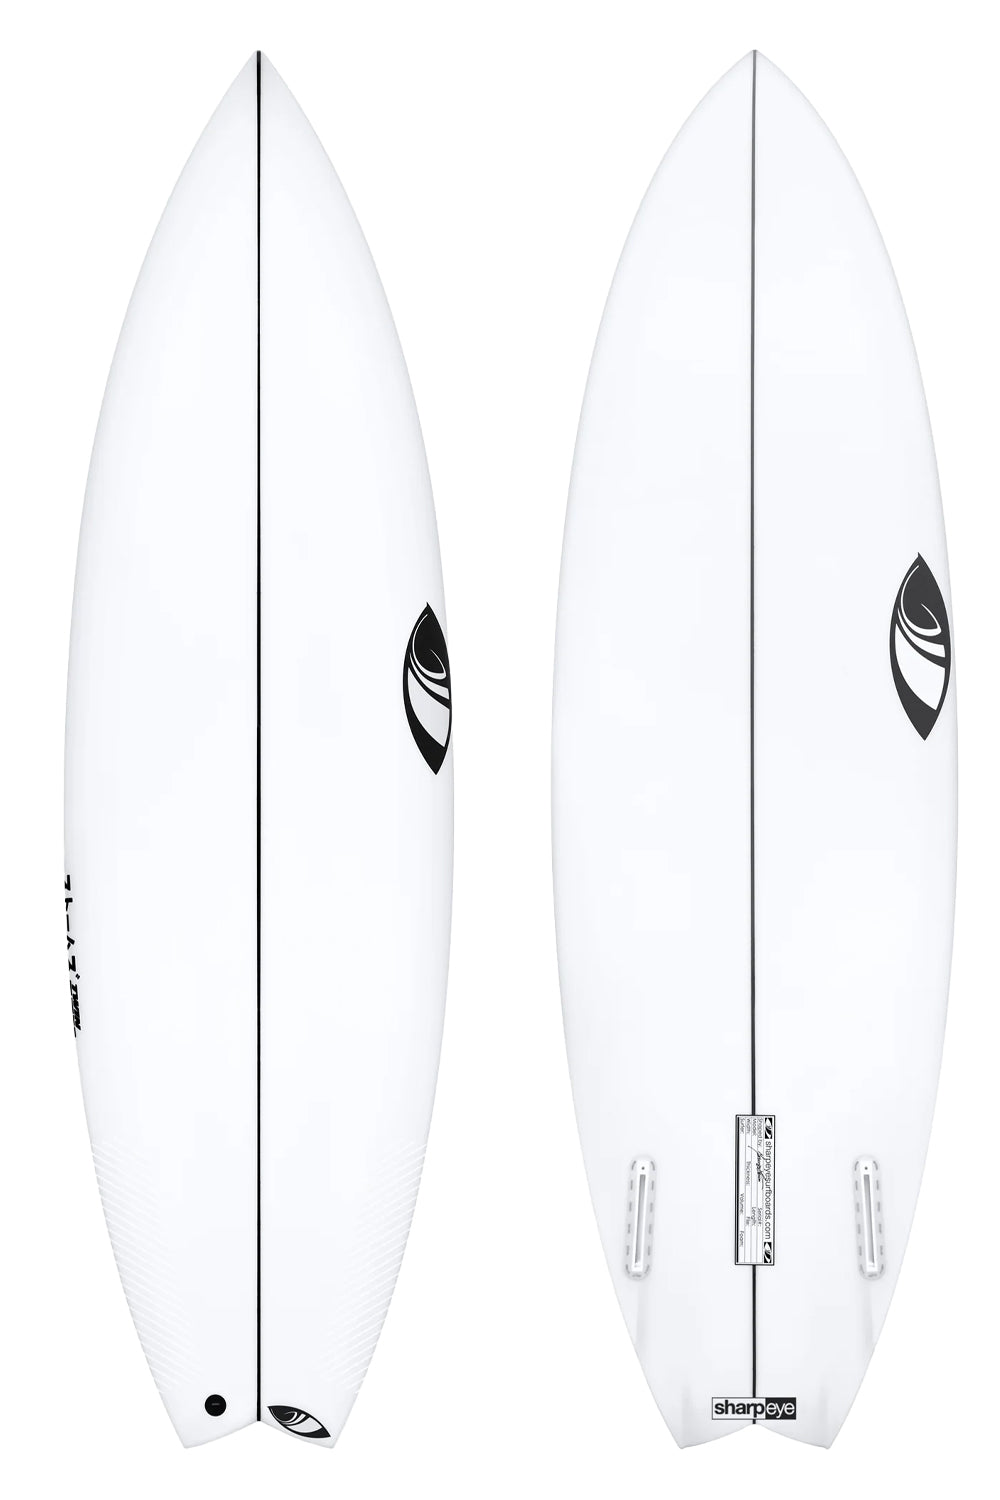 Sharpeye Storms T2 (Twin Turbo) Surfboard